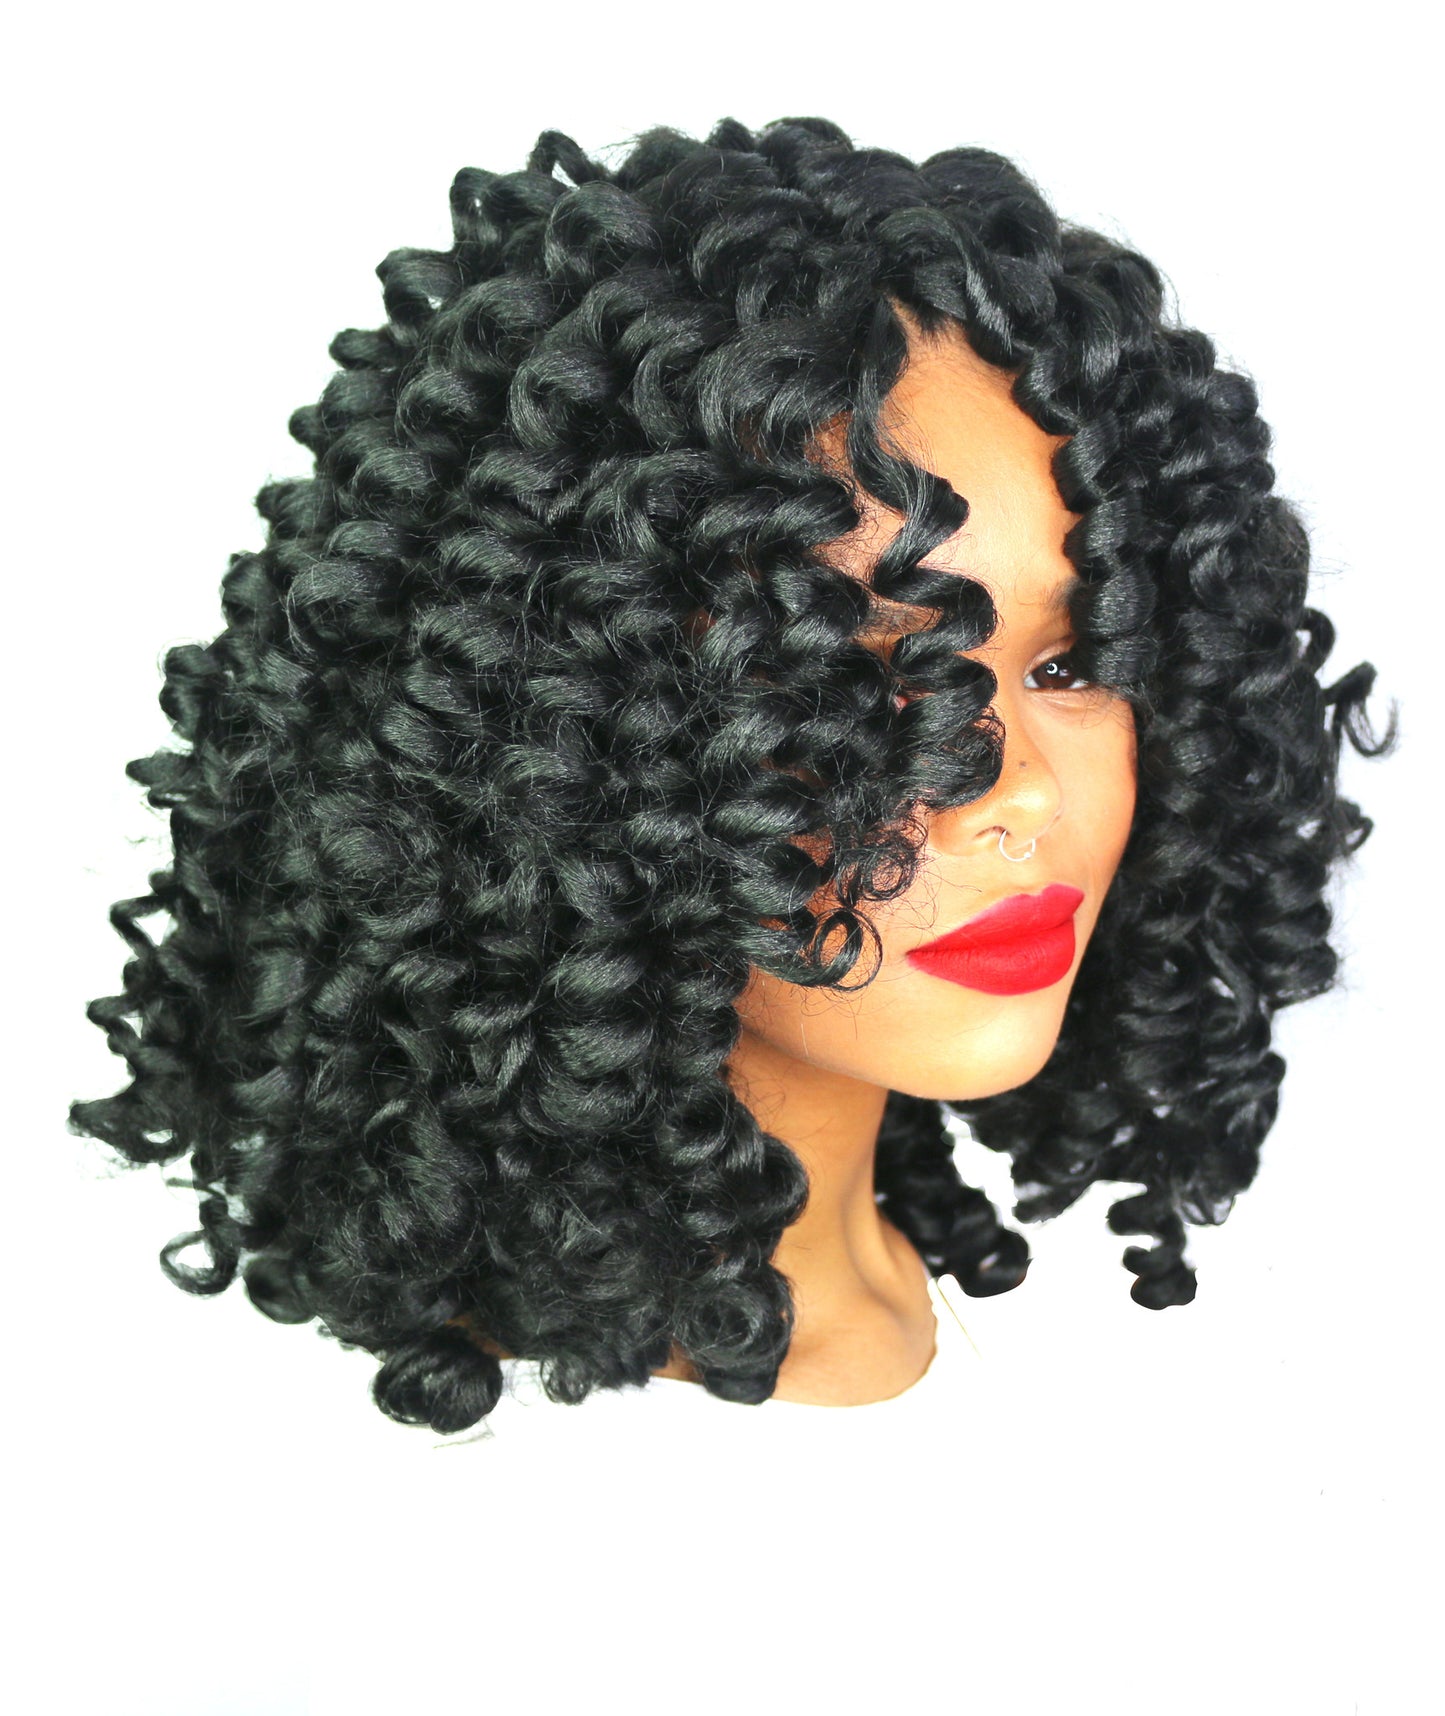 Serene Curls - Trendy Tresses